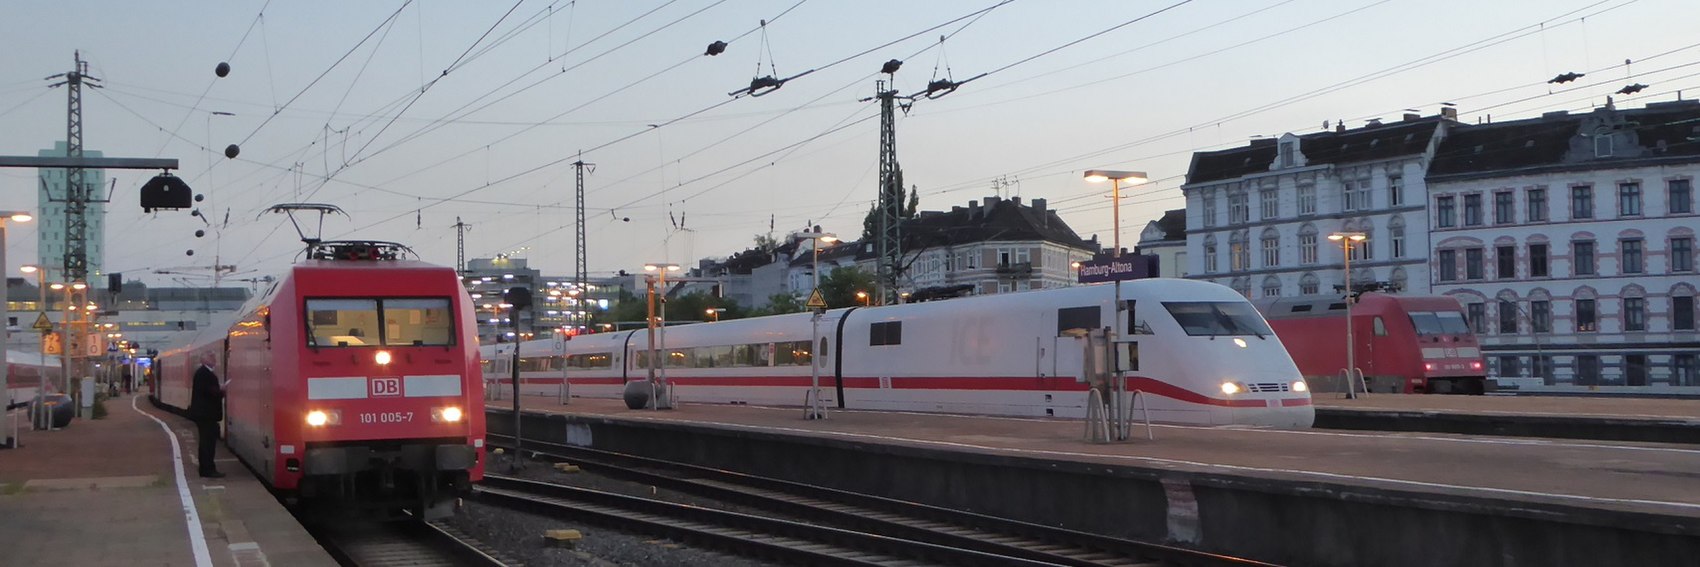 Rail travel in Germany